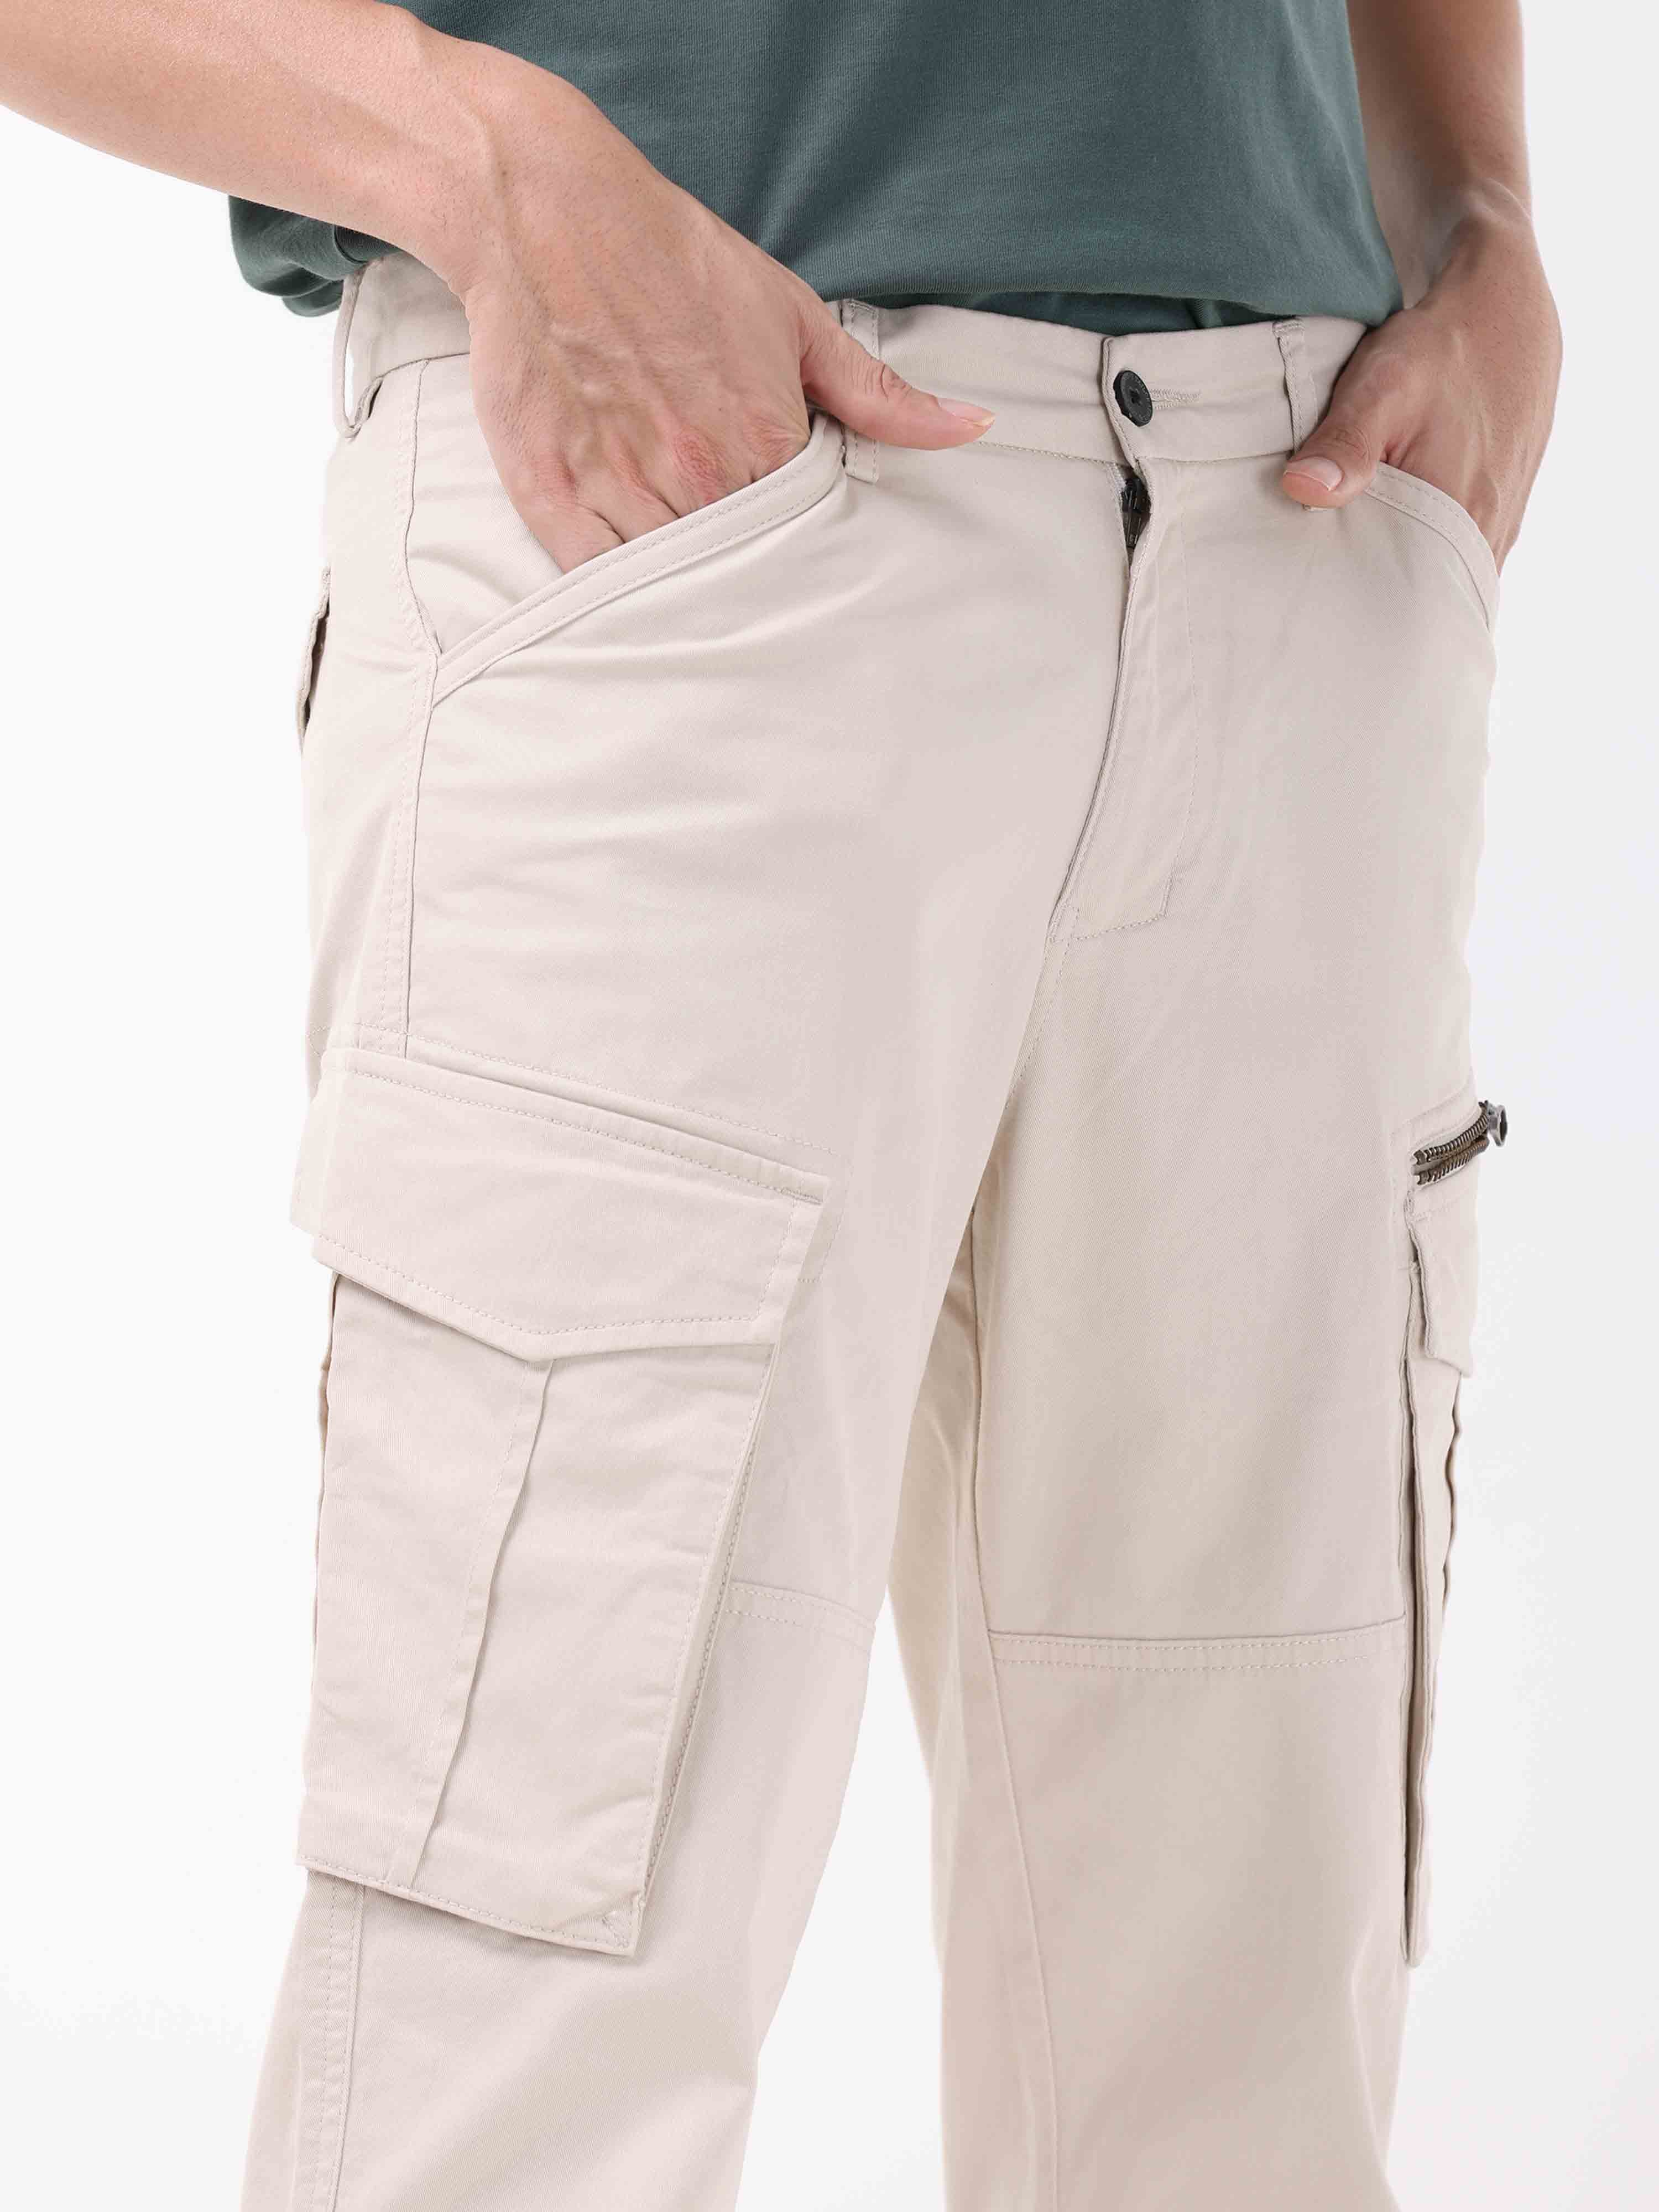 Shop Latest Cream Cargo Pants for Men Online in India